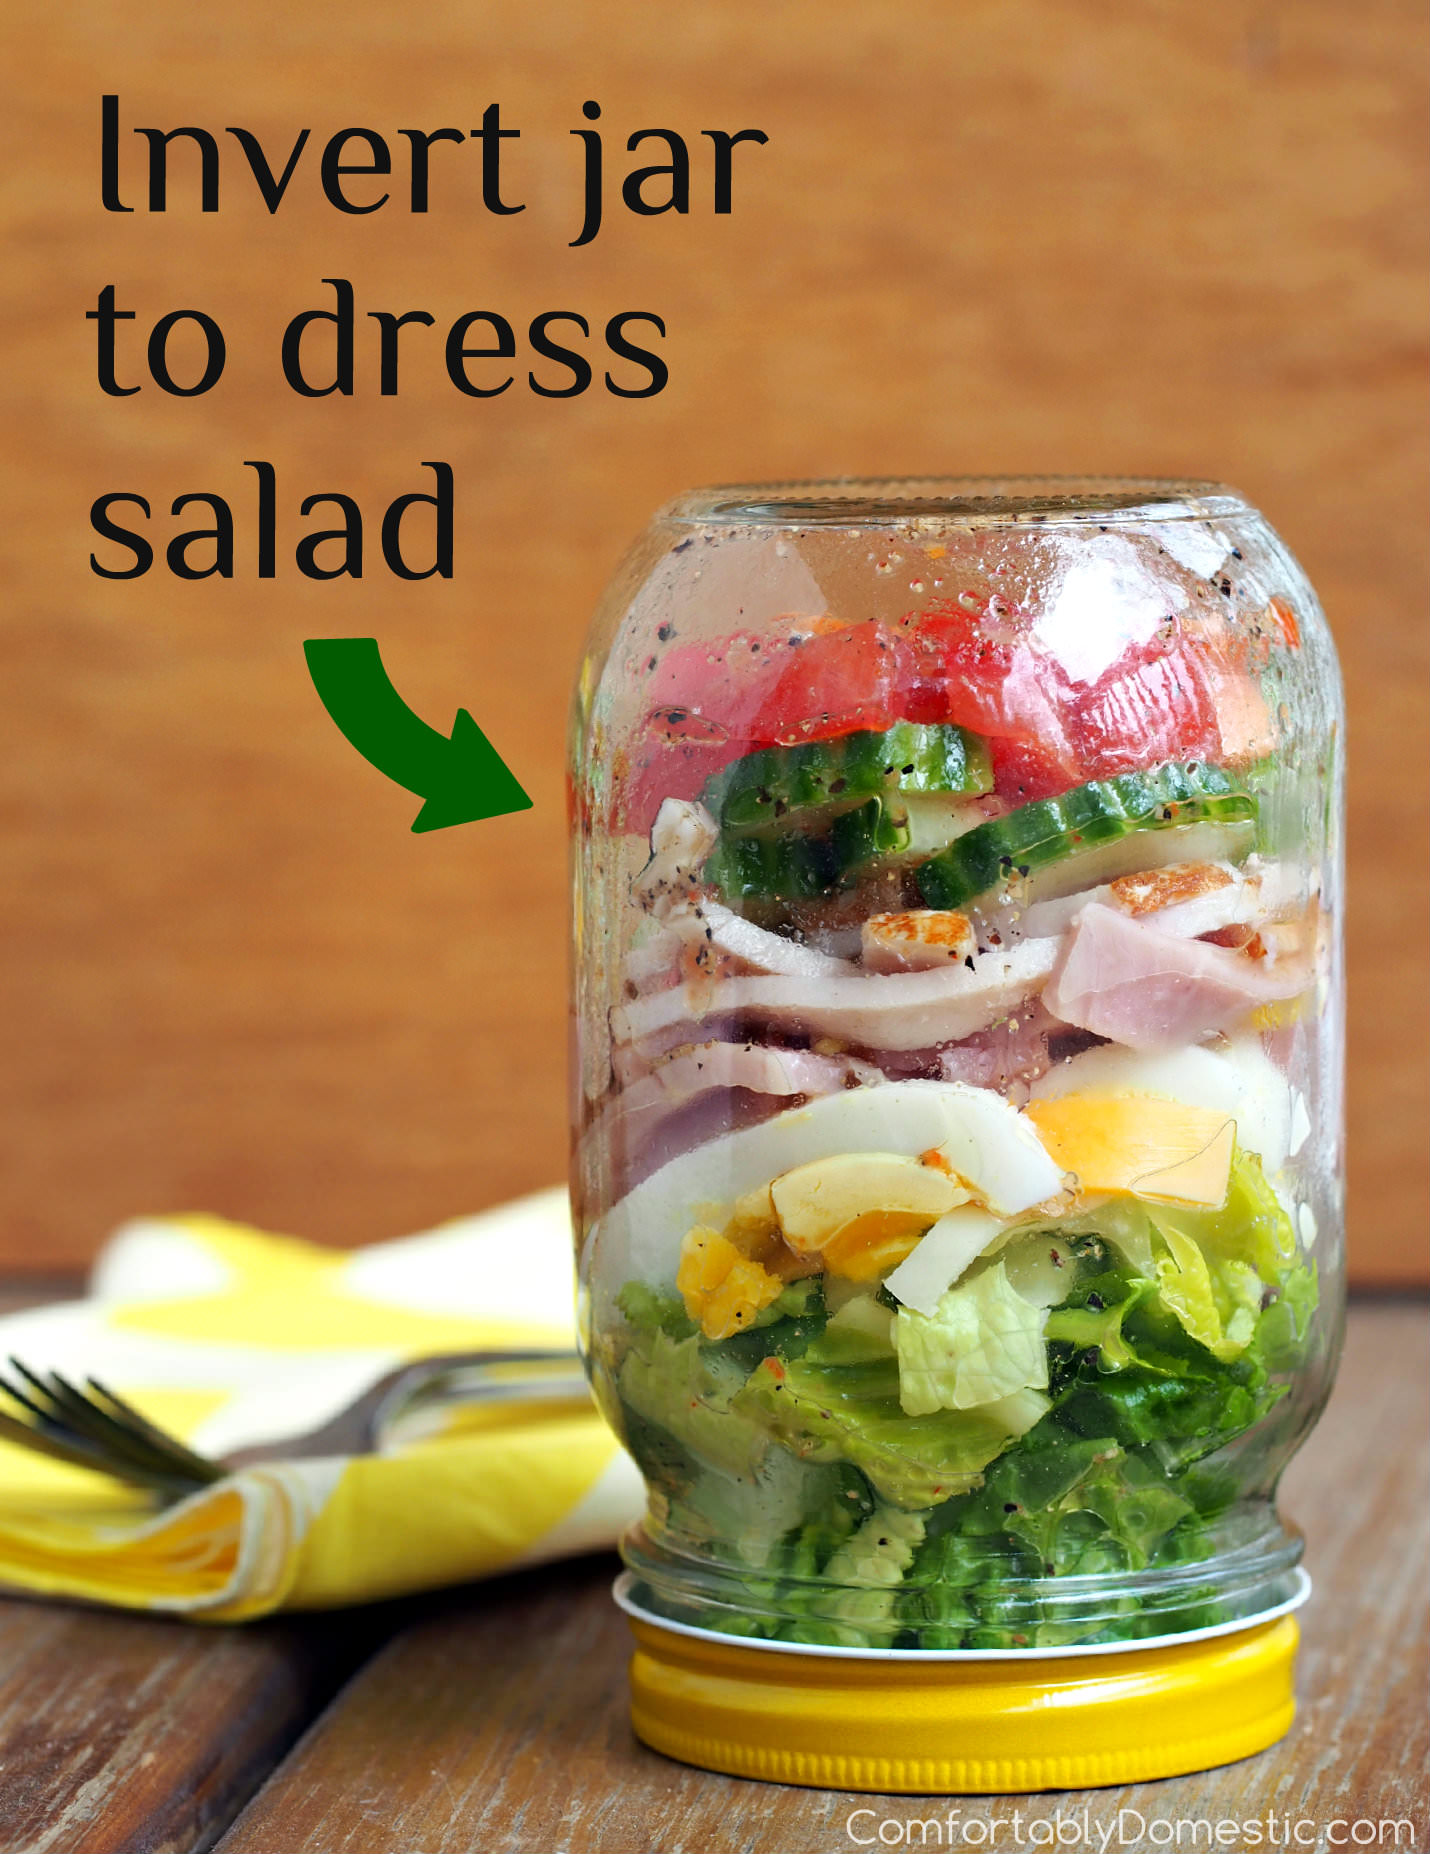 Chef Salad in a Jar - a great make-ahead lunch idea! | ComfortablyDomestic.com